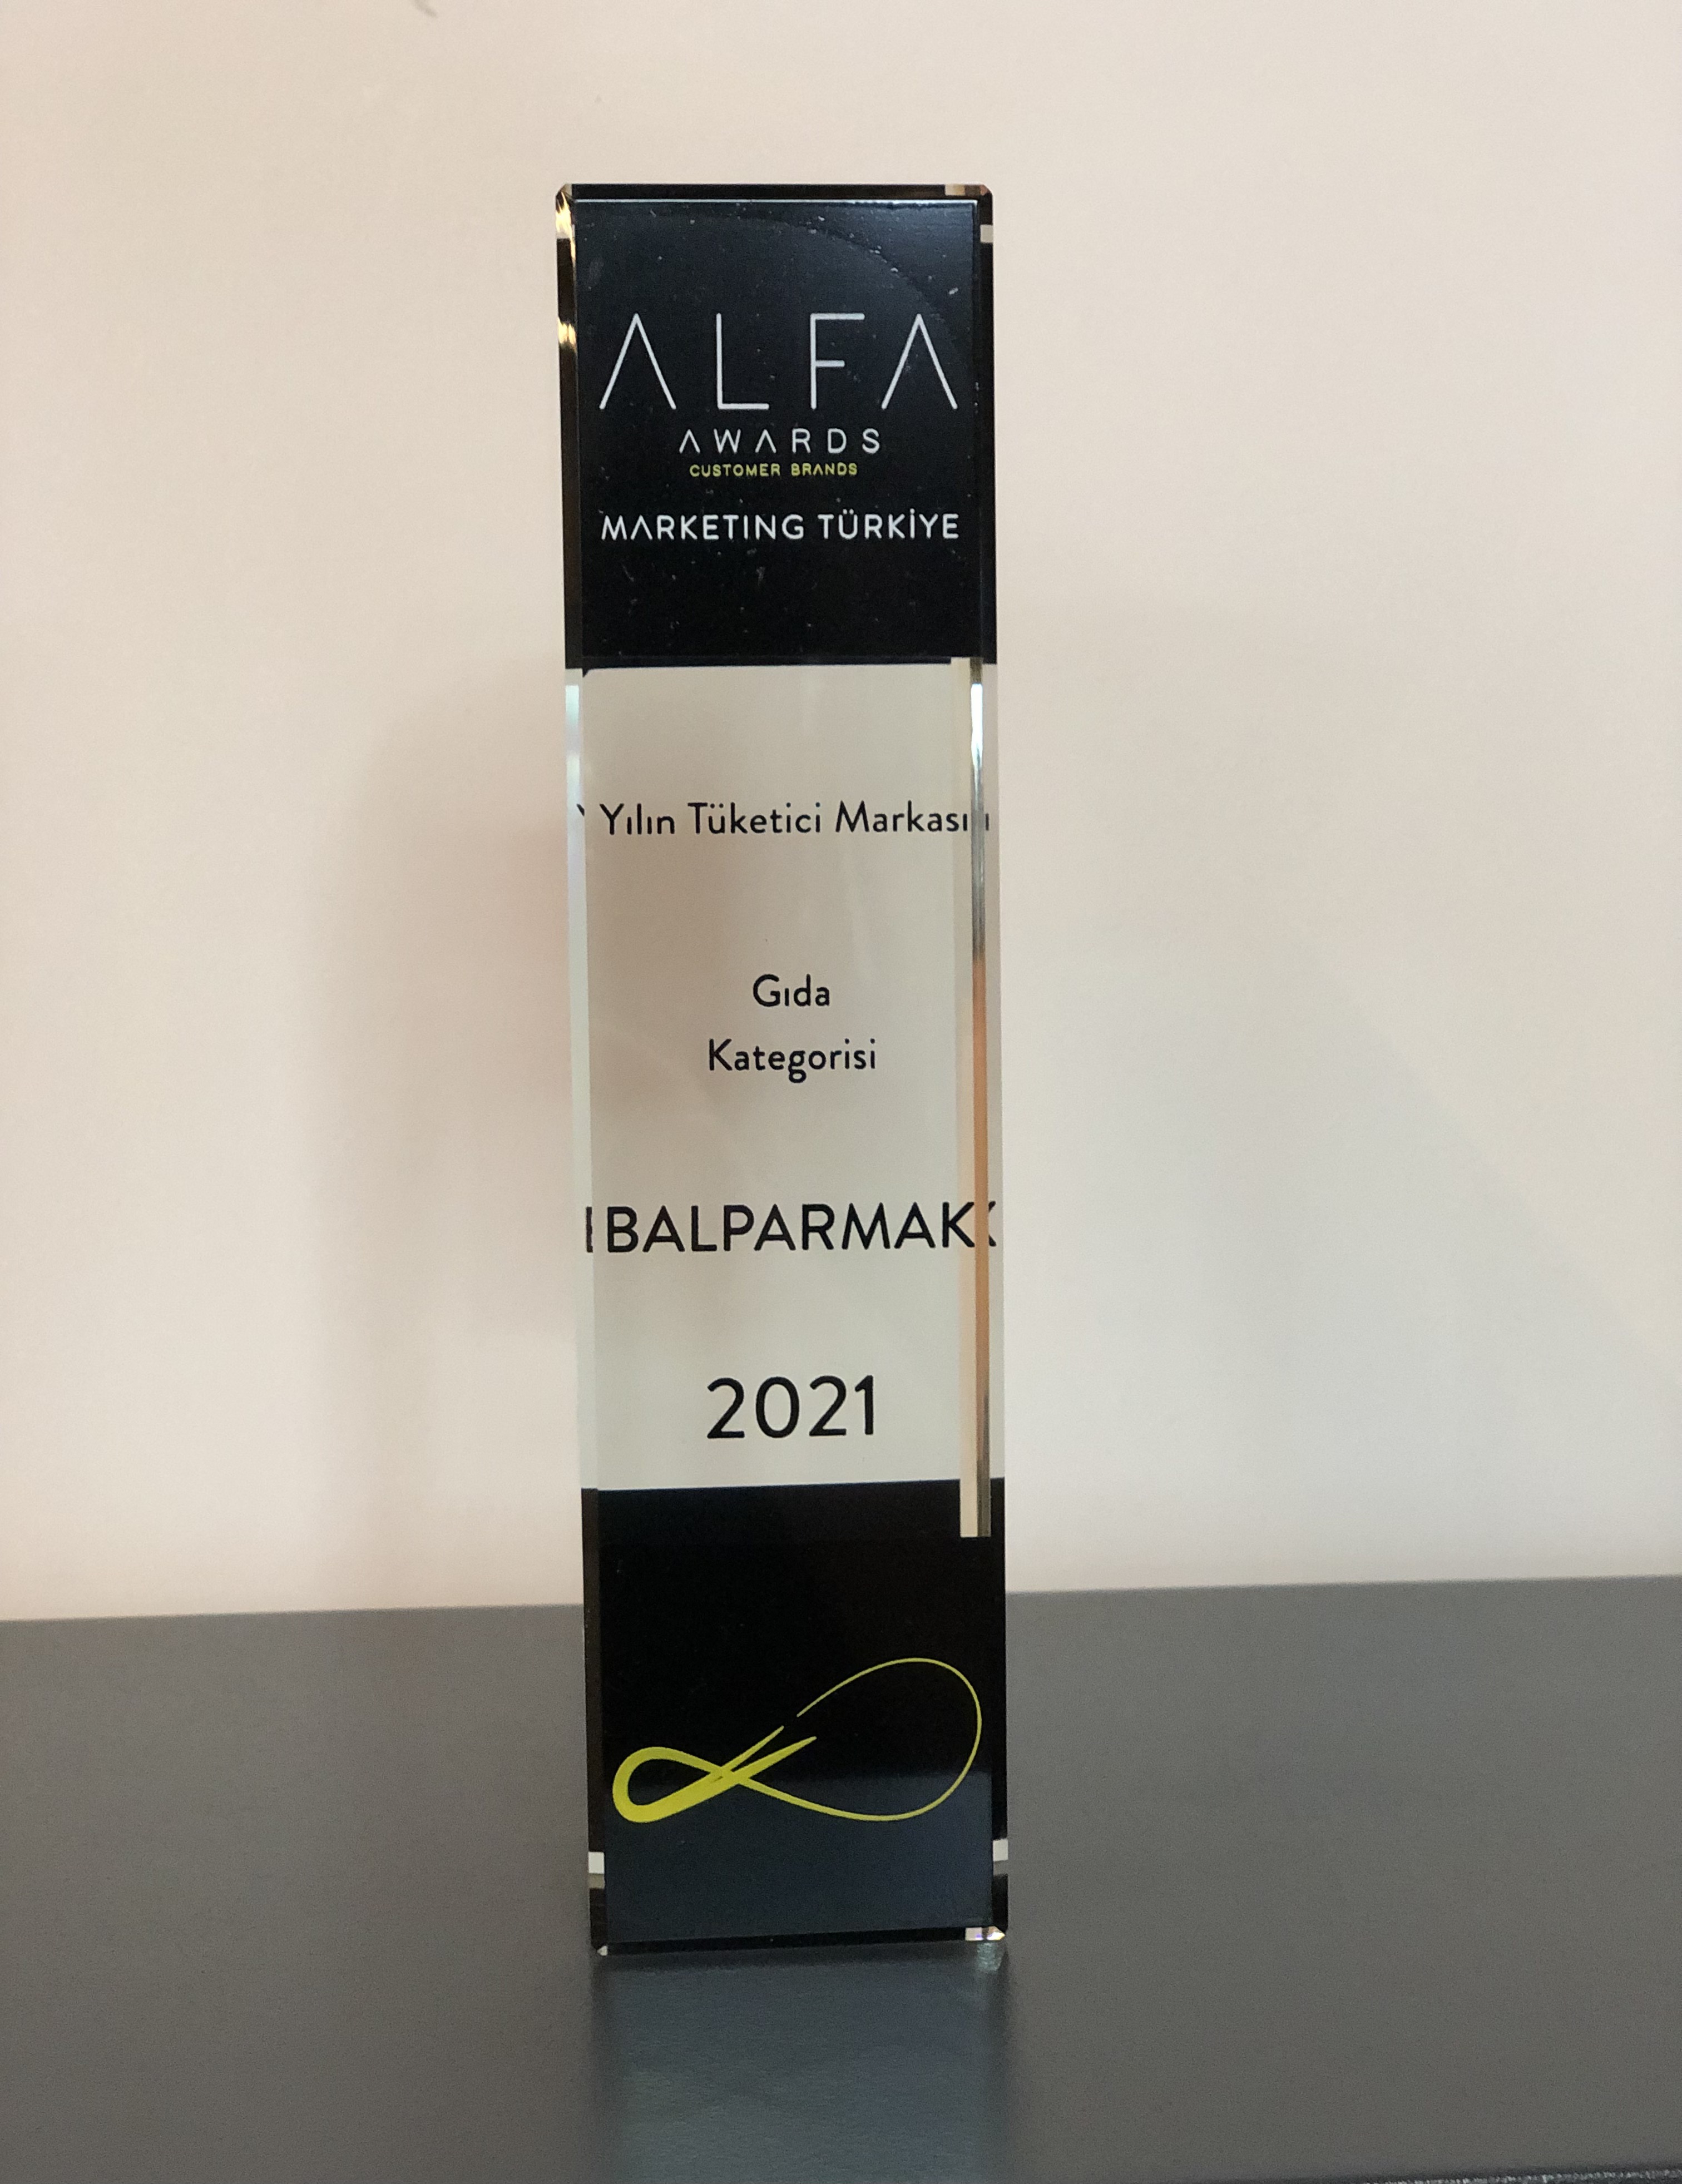 A.L.F.A. Awards “Customer Brand” Awards